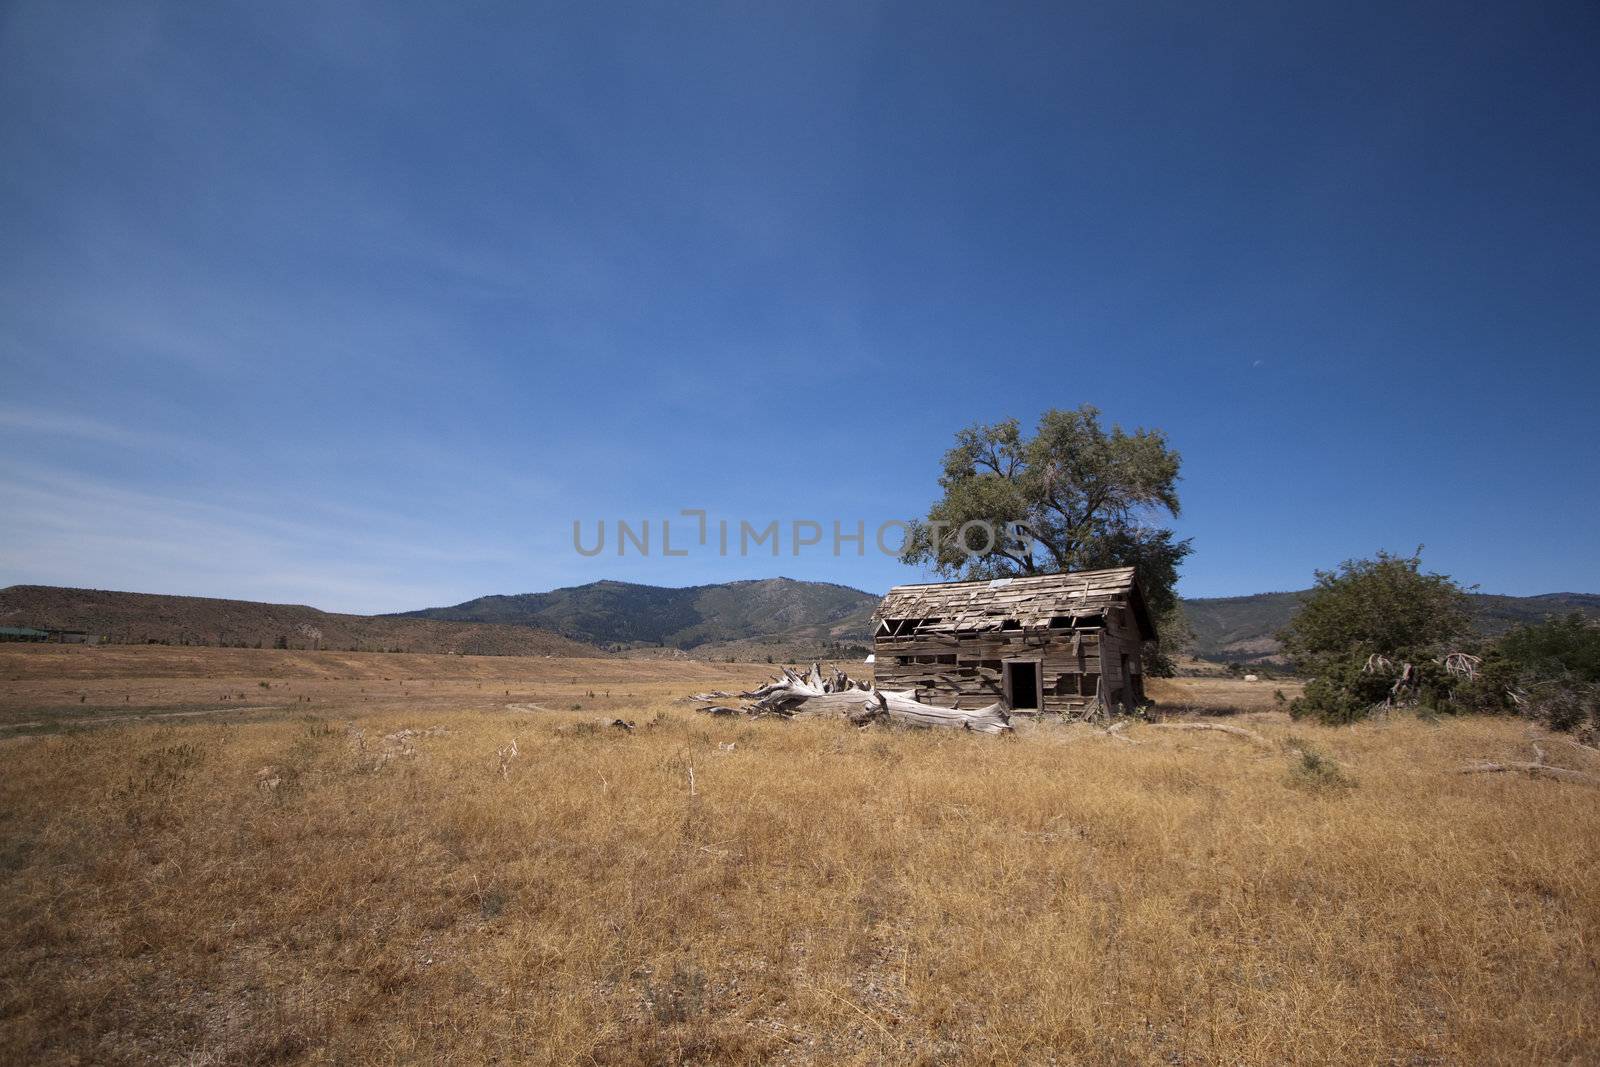 an old abandoned barn in an open field